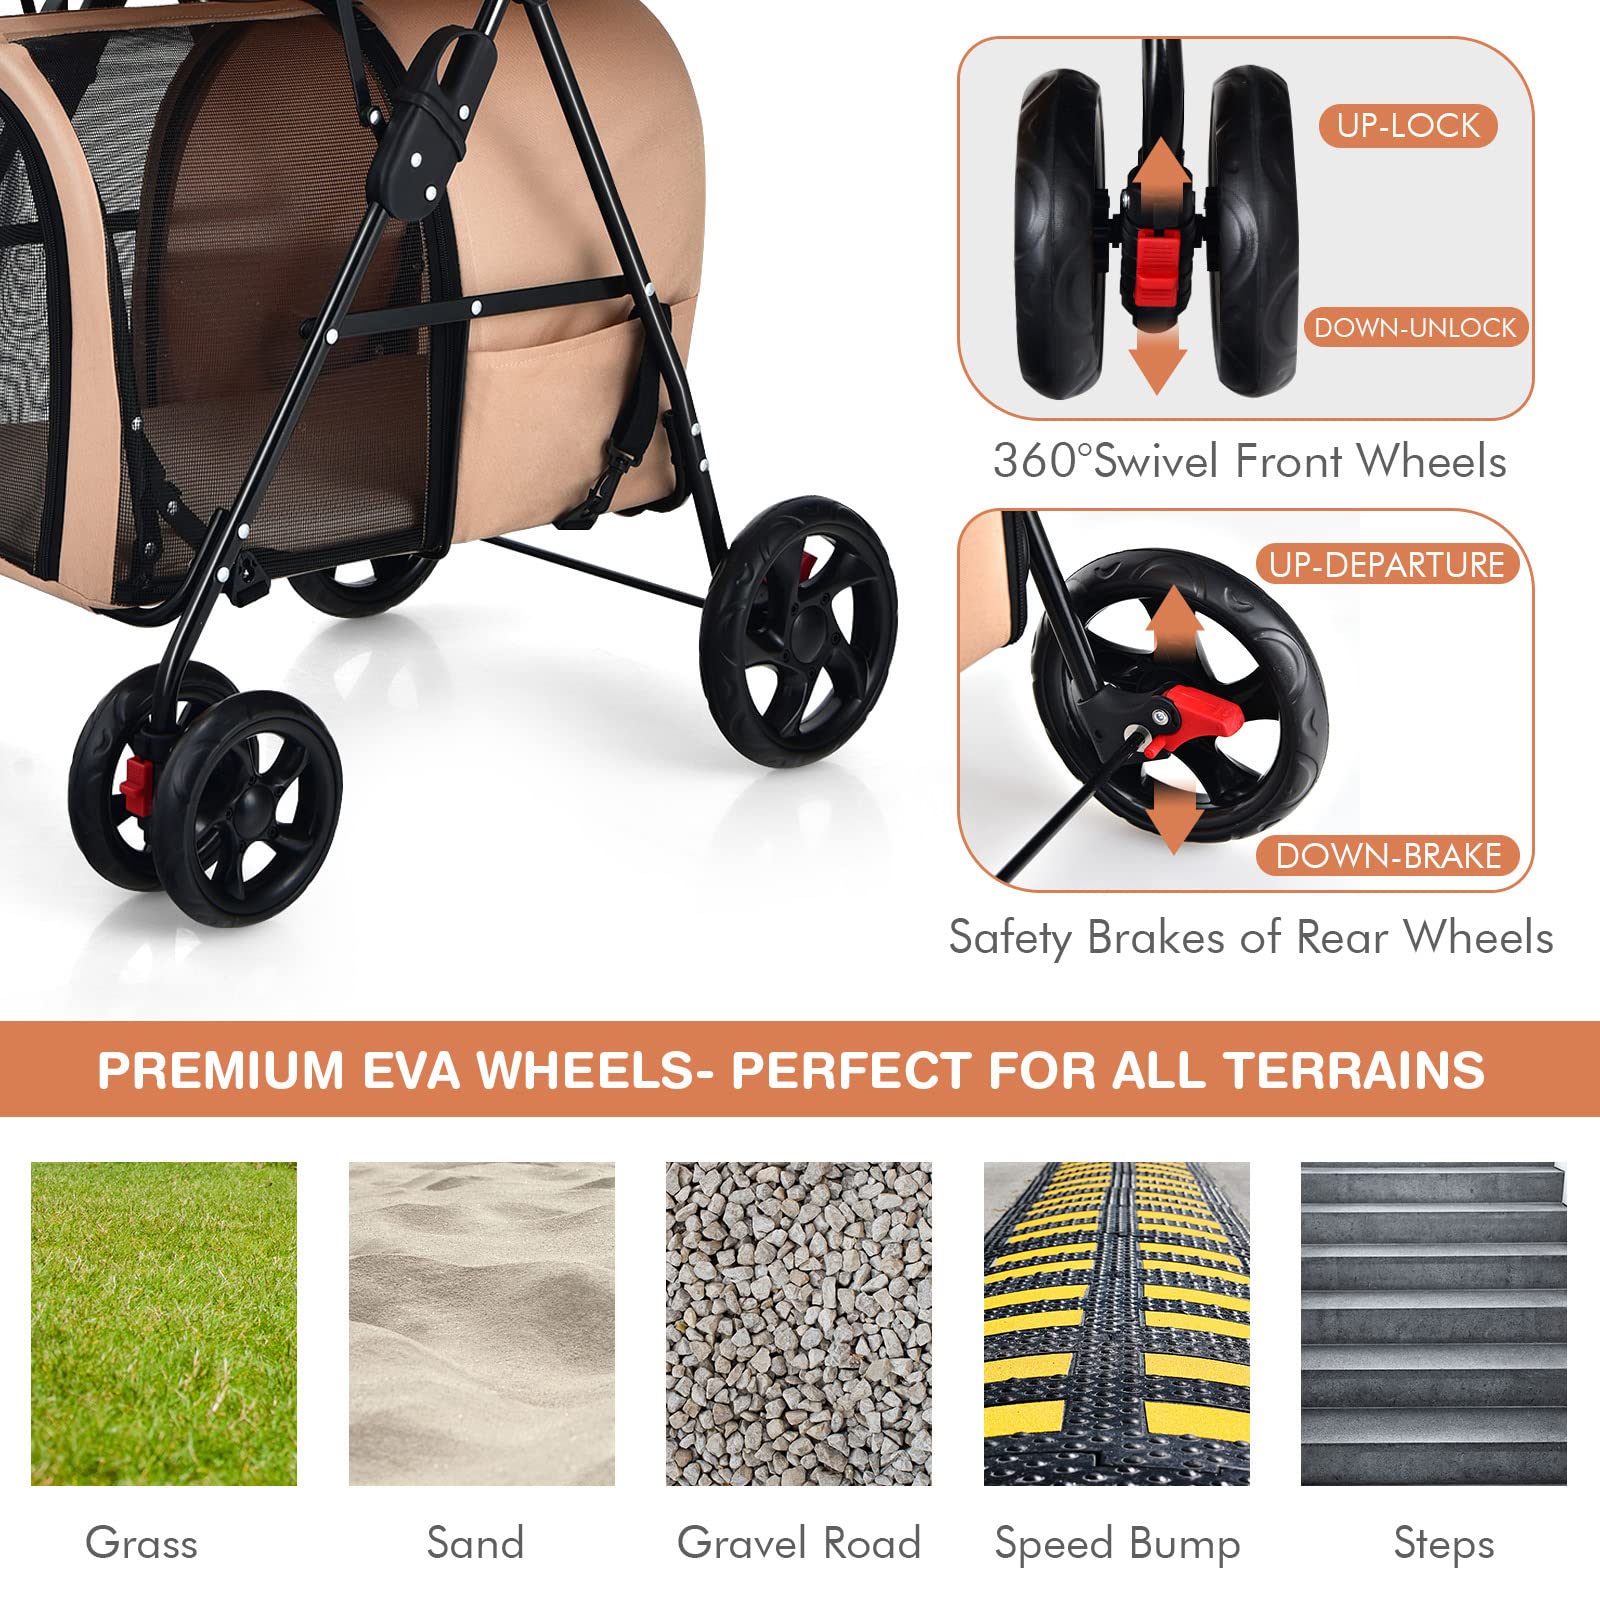 Double Pet Stroller with 2 Detachable Carrier Bags, 4 Lockable Wheels Cat Stroller